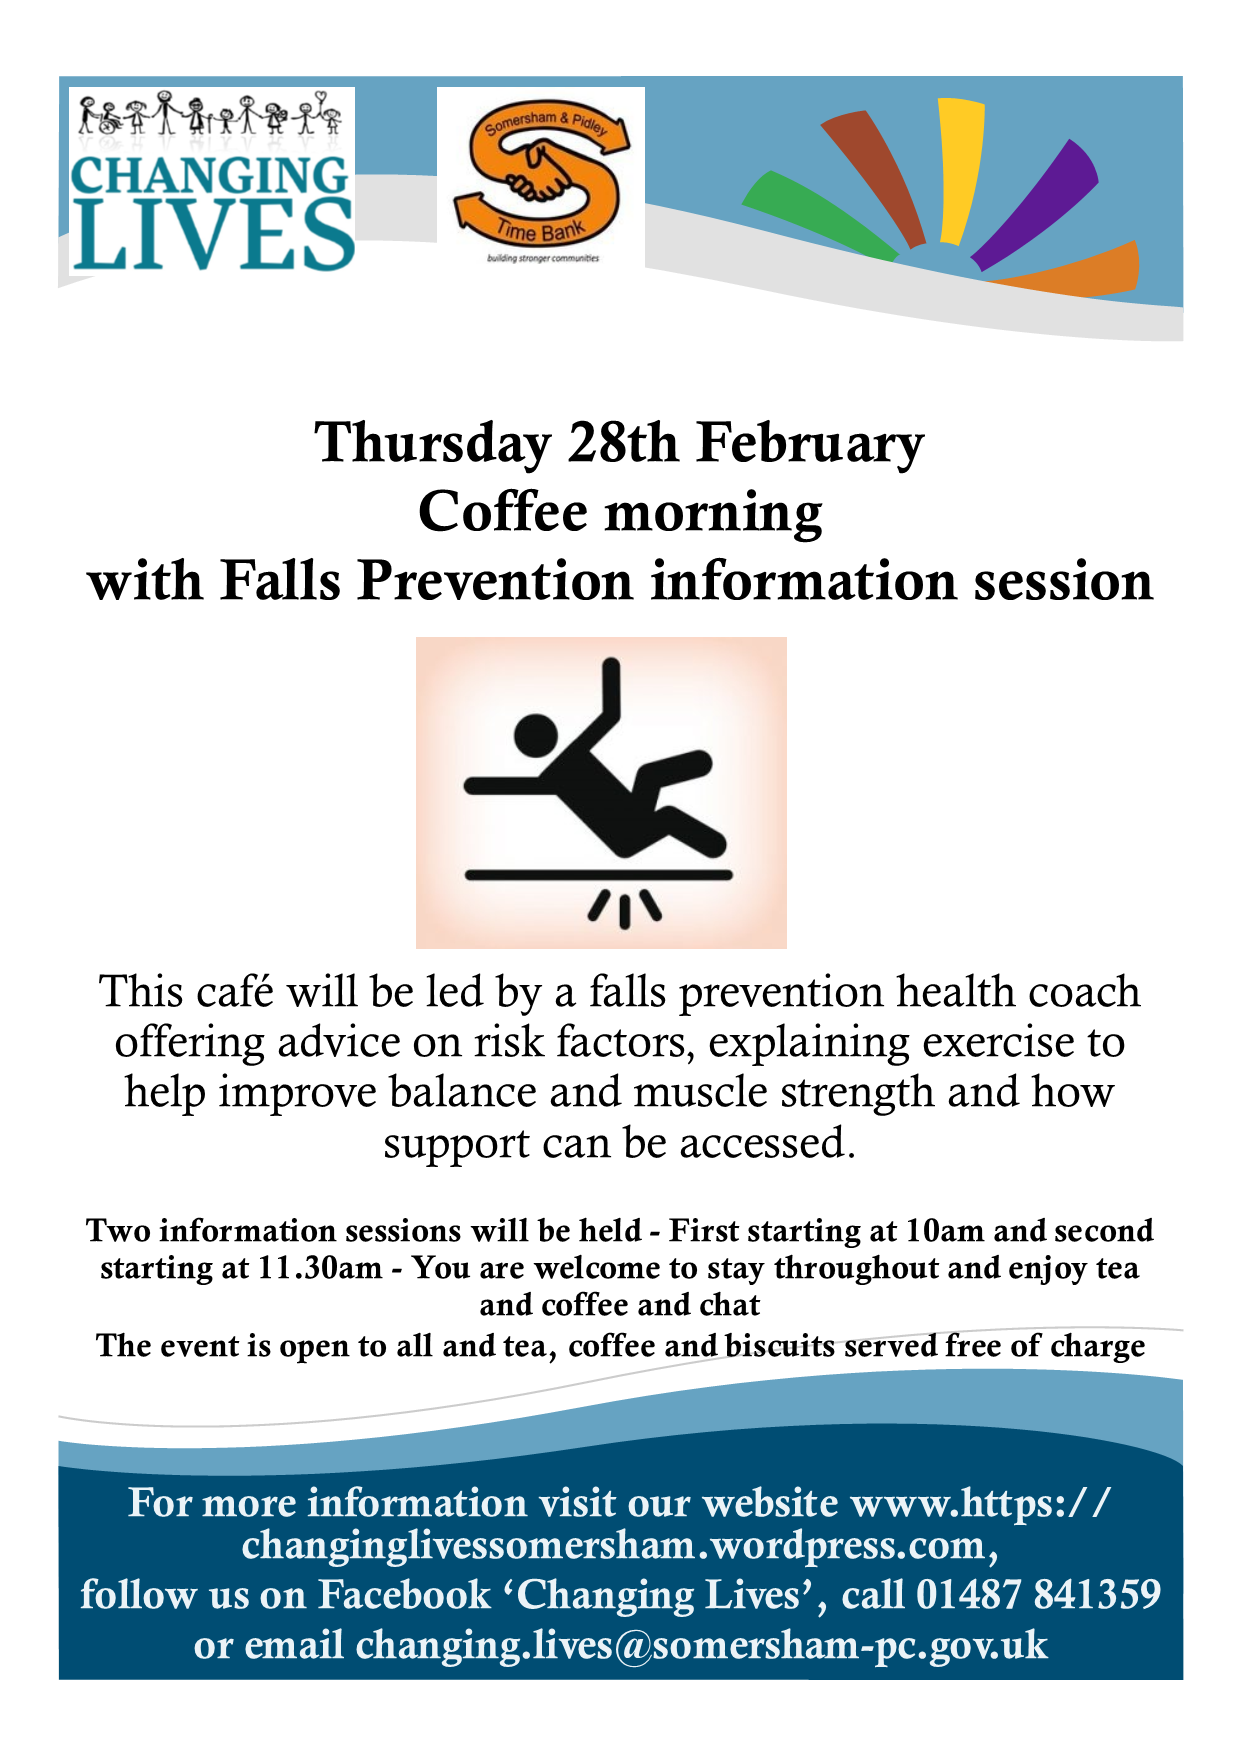 Falls prevention cafe Feb 2019.pub